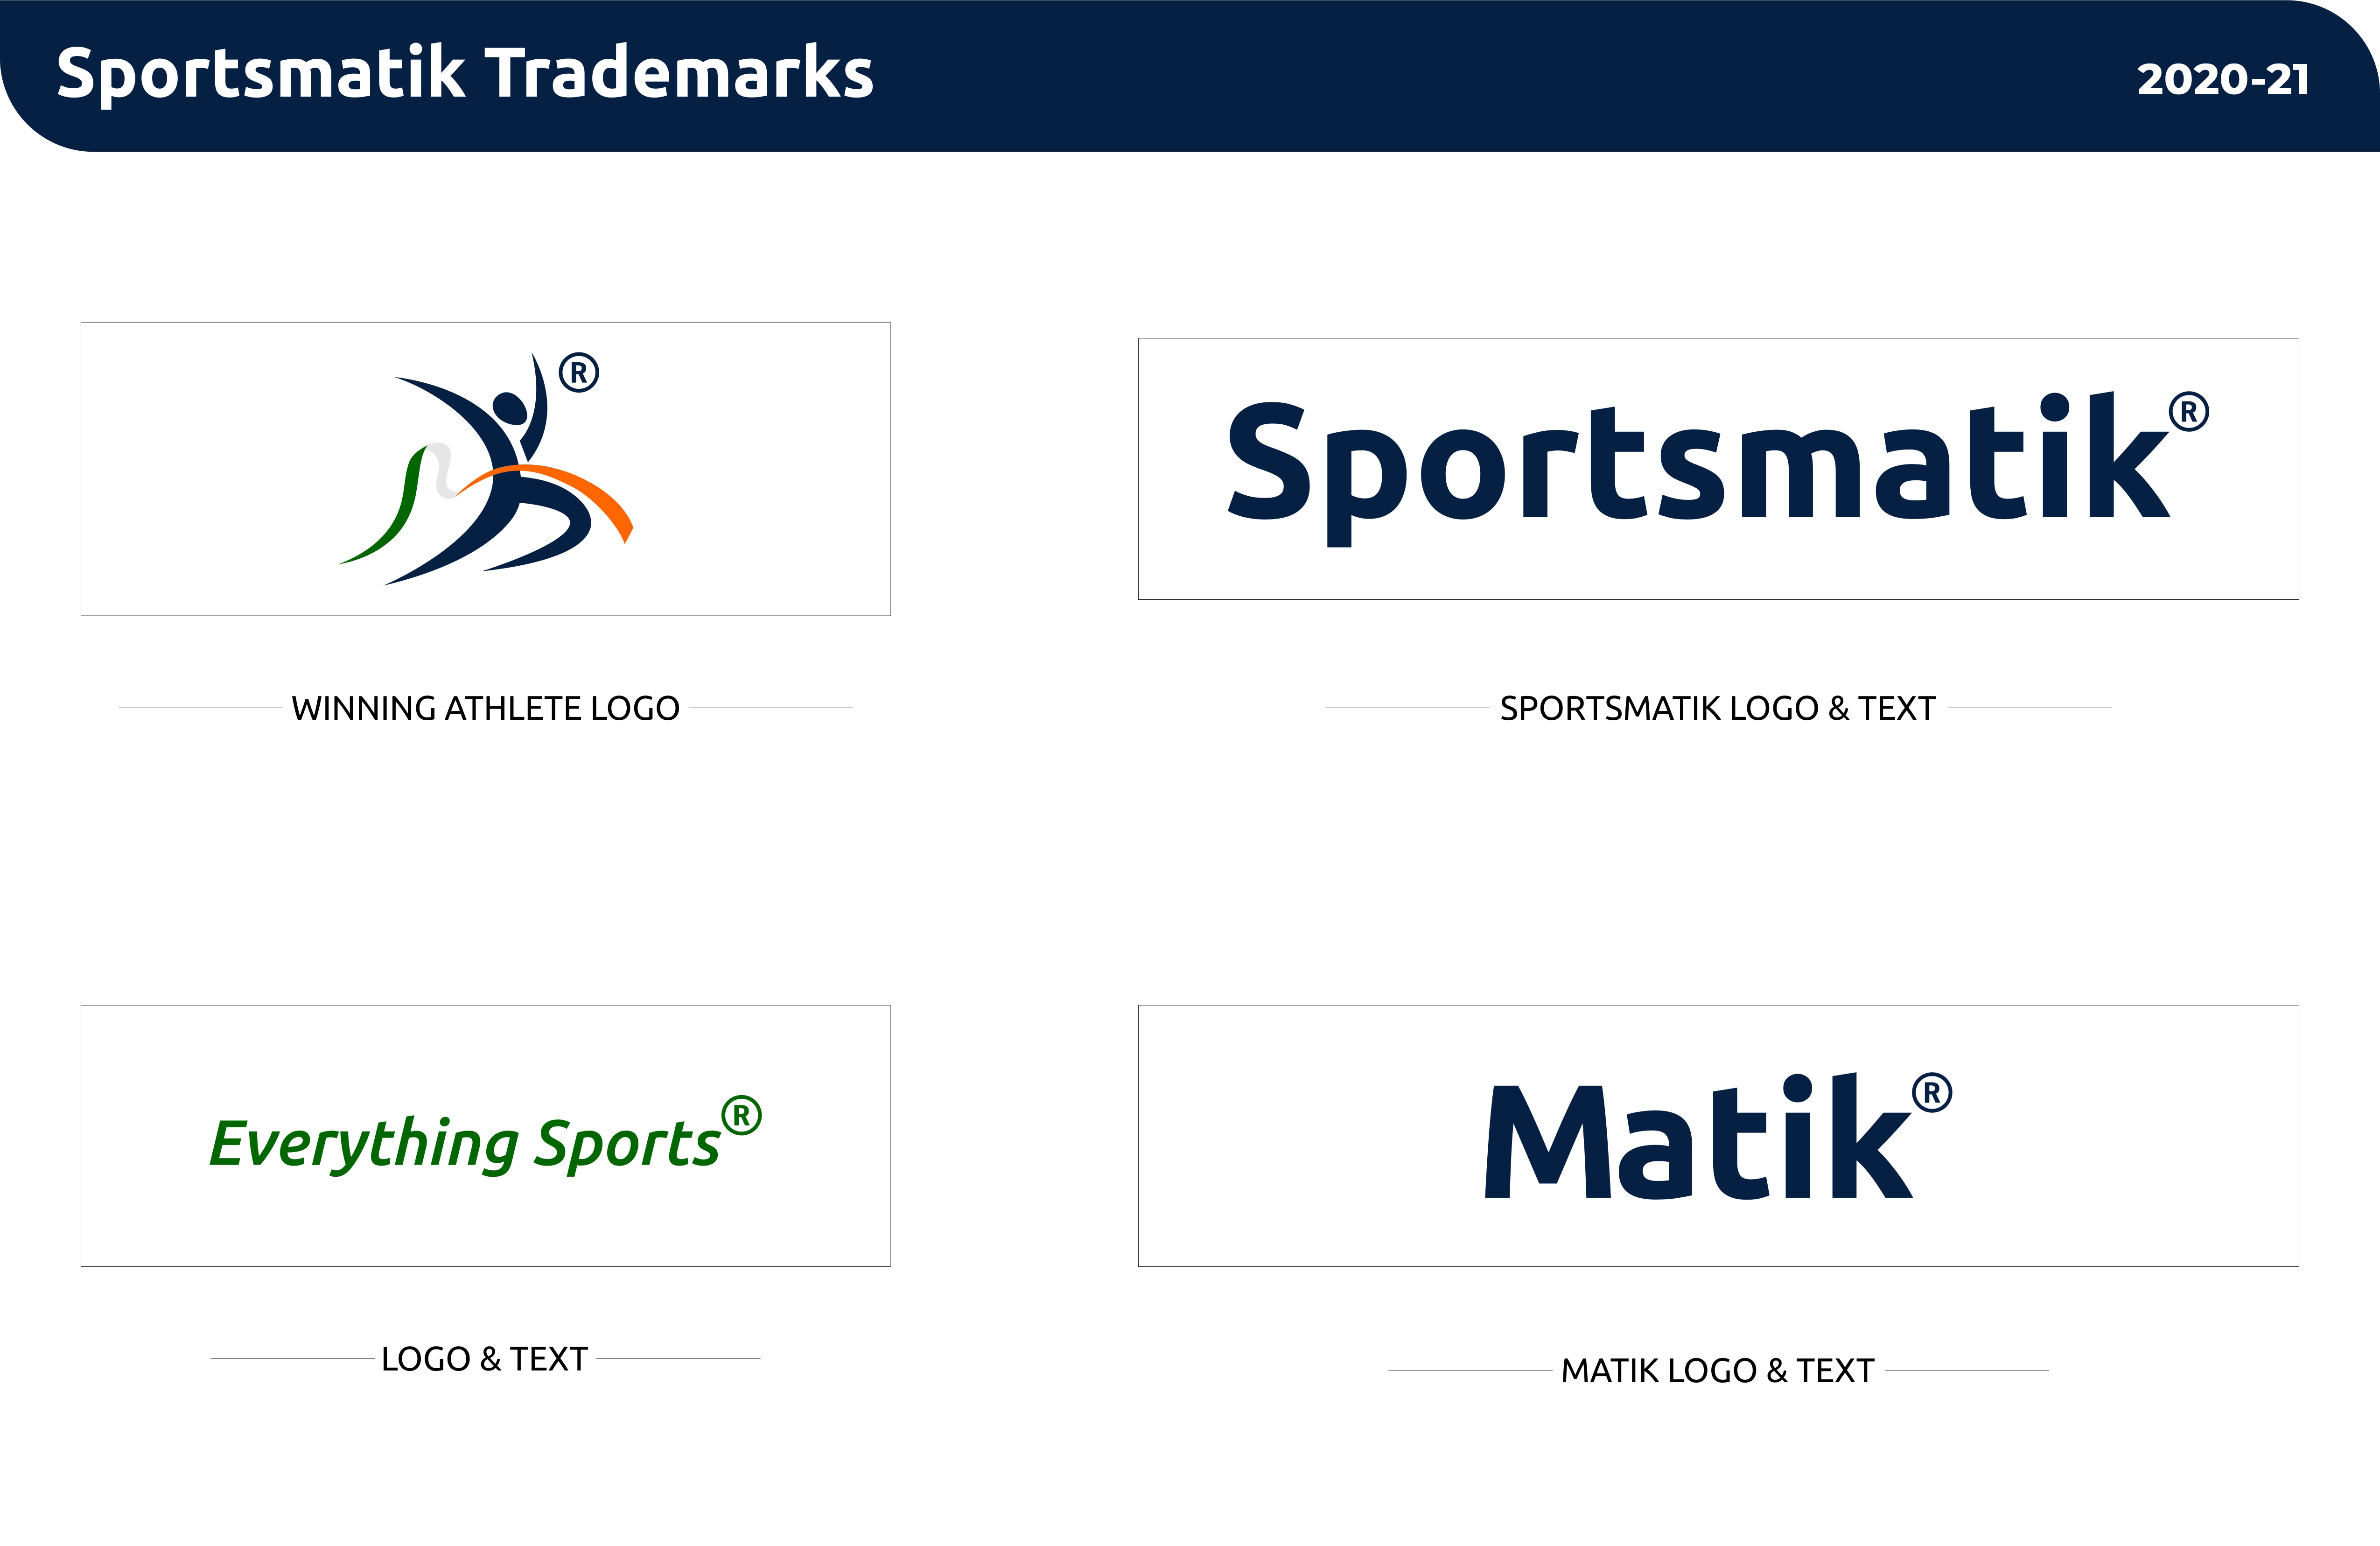 Sportsmatik logo trademarks